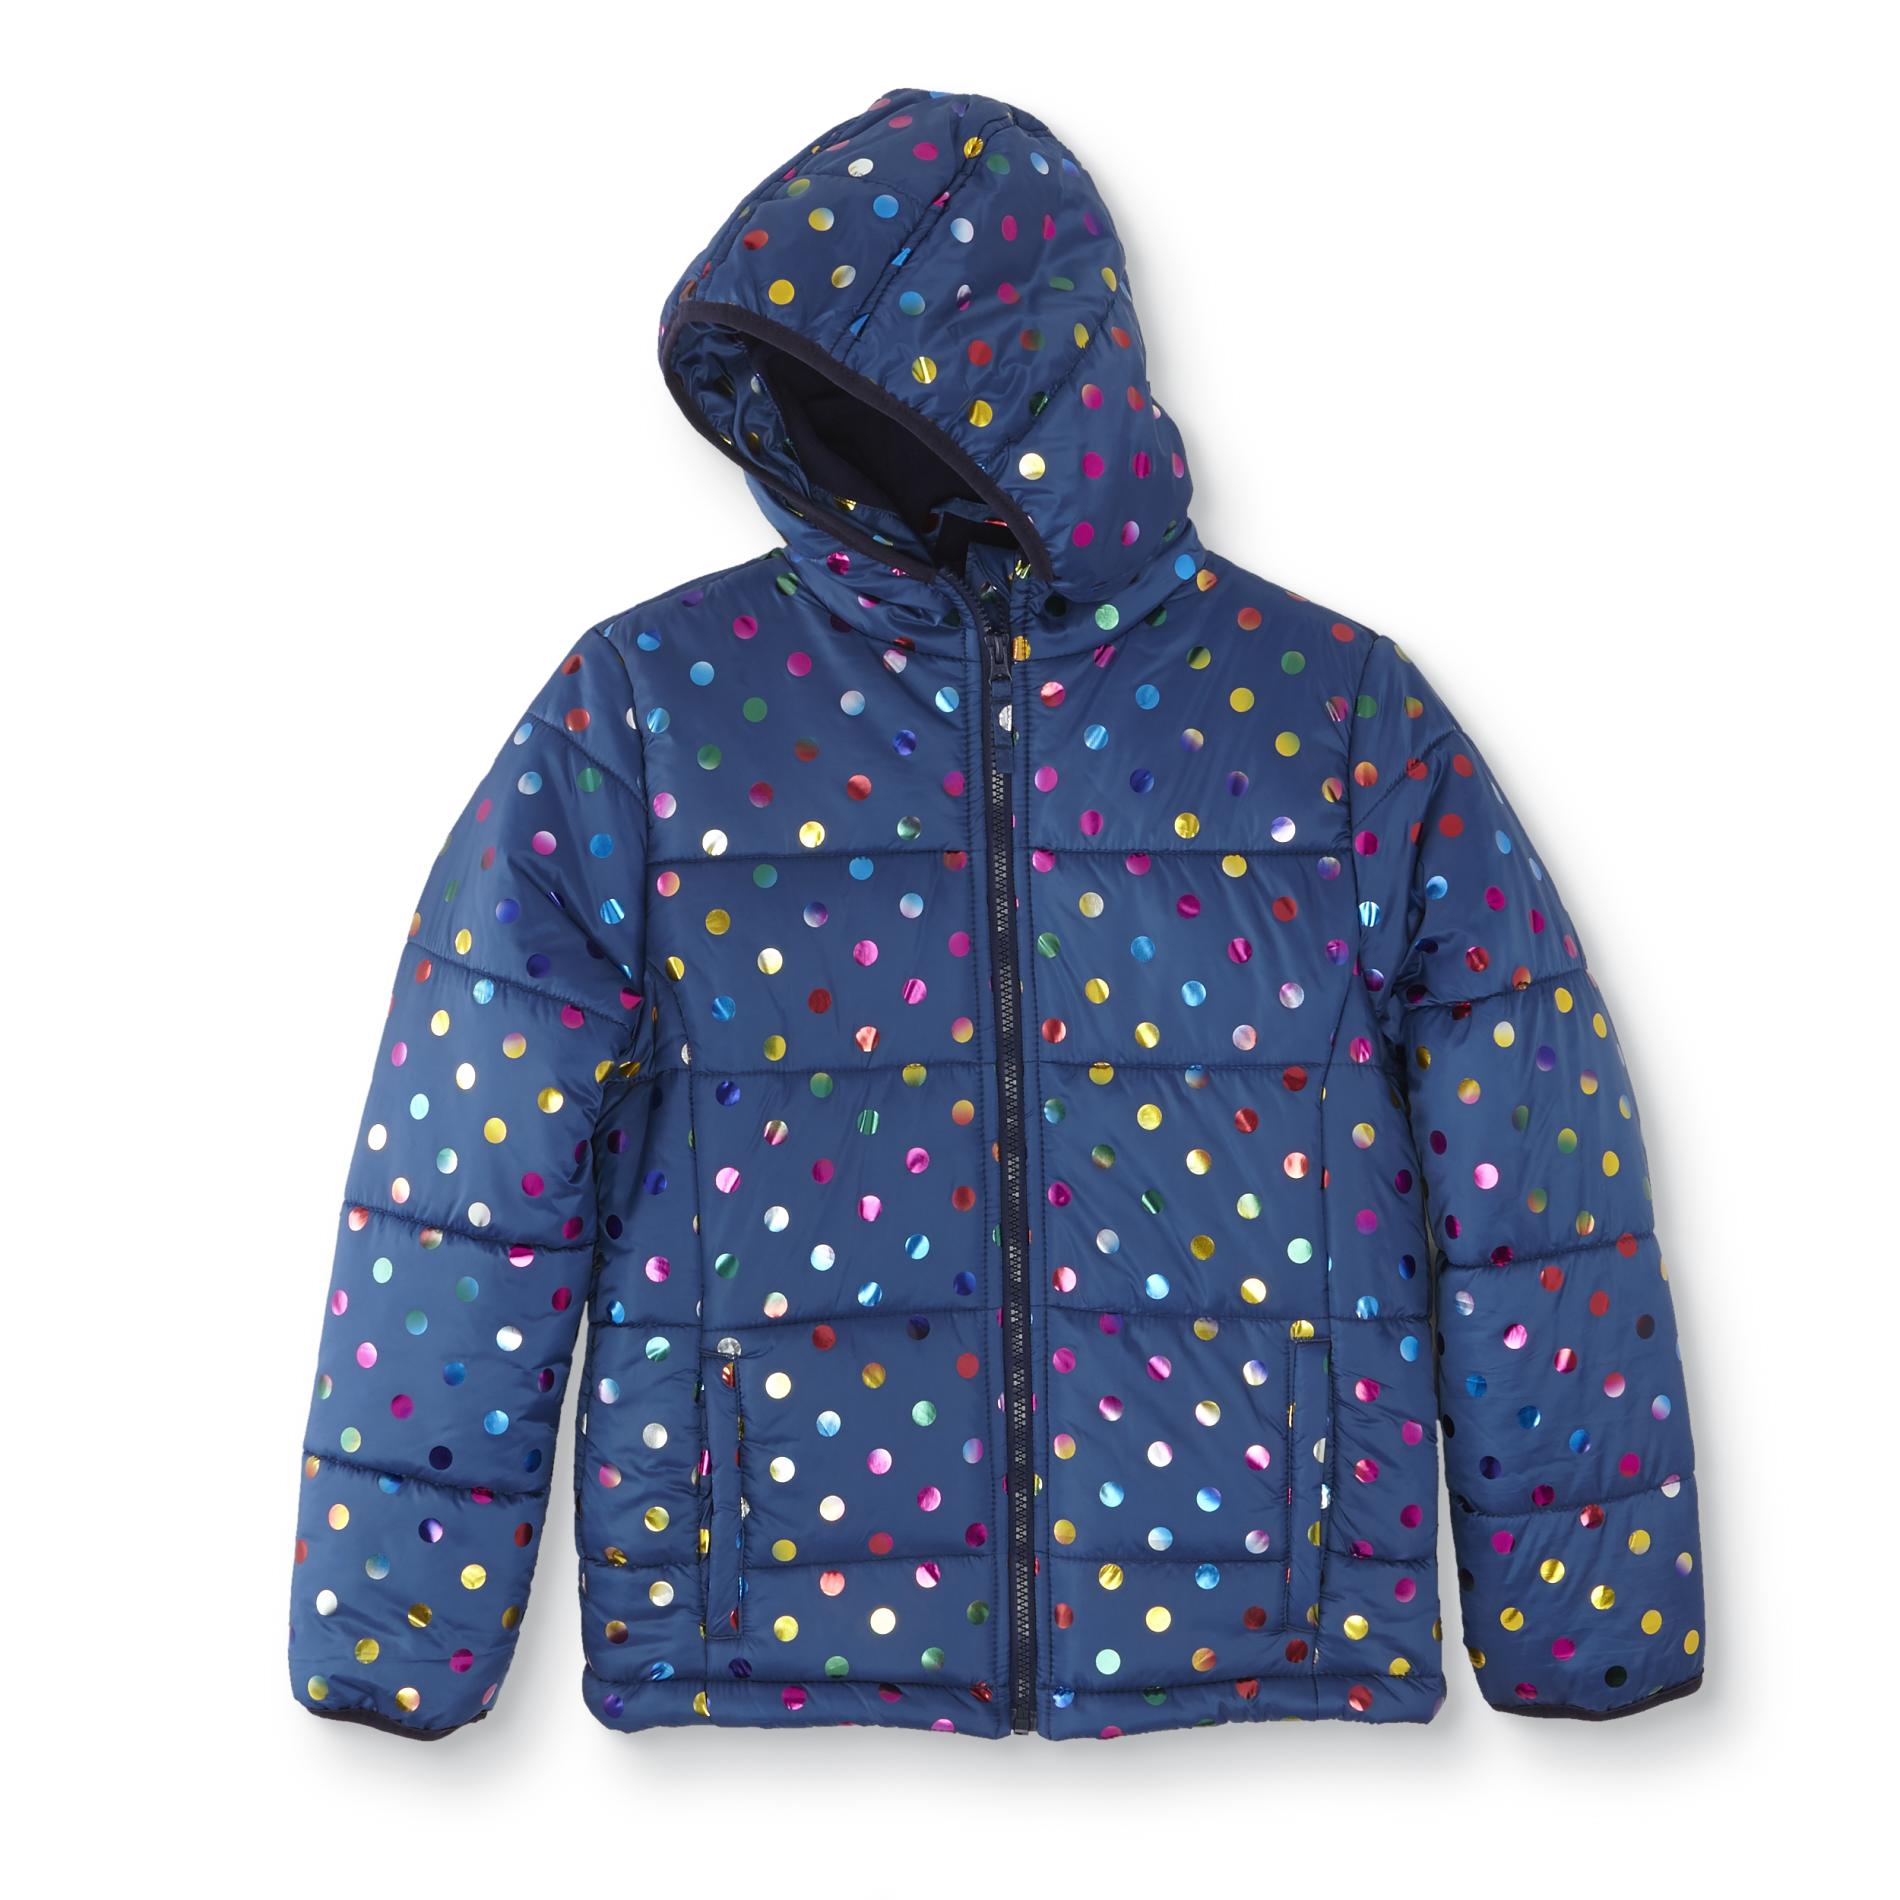 Basic Editions Girls' Winter Puffer Coat - Dots